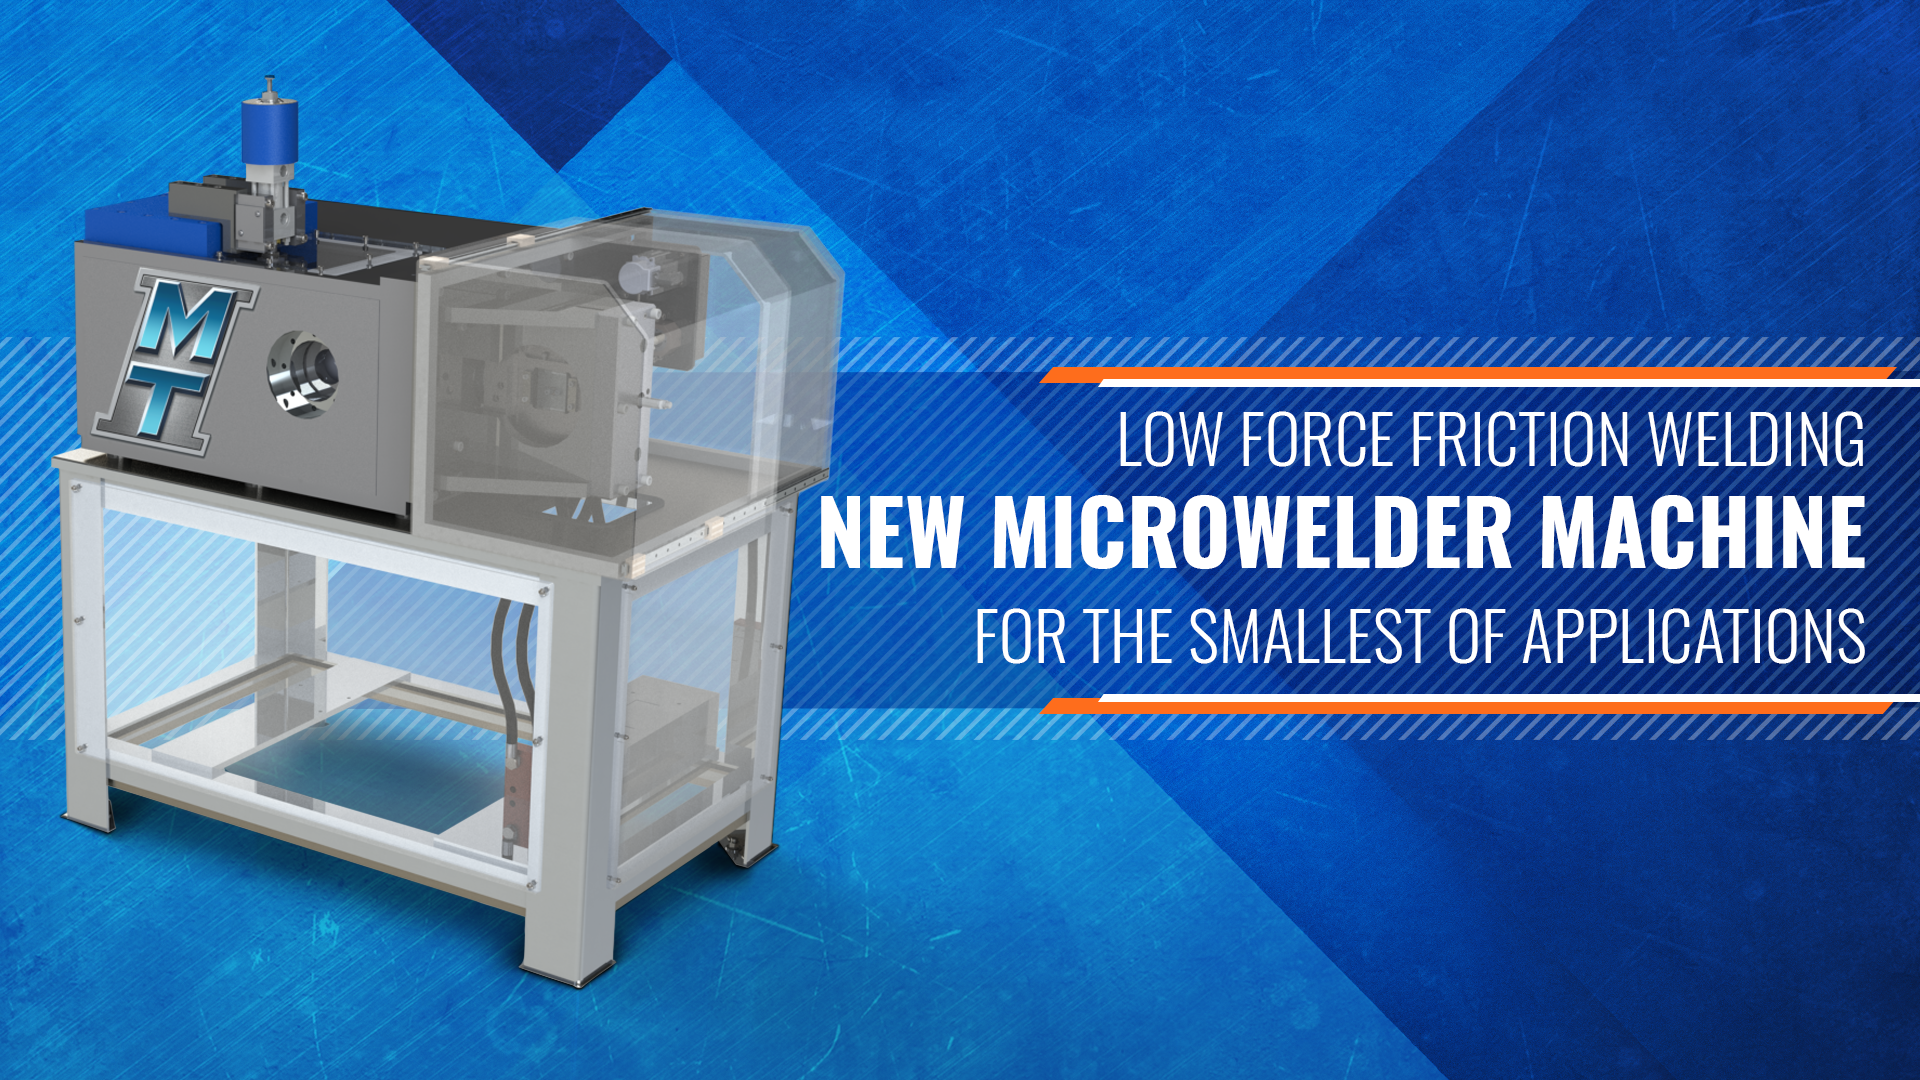 New Microwelder Machine Unlocks New Applications